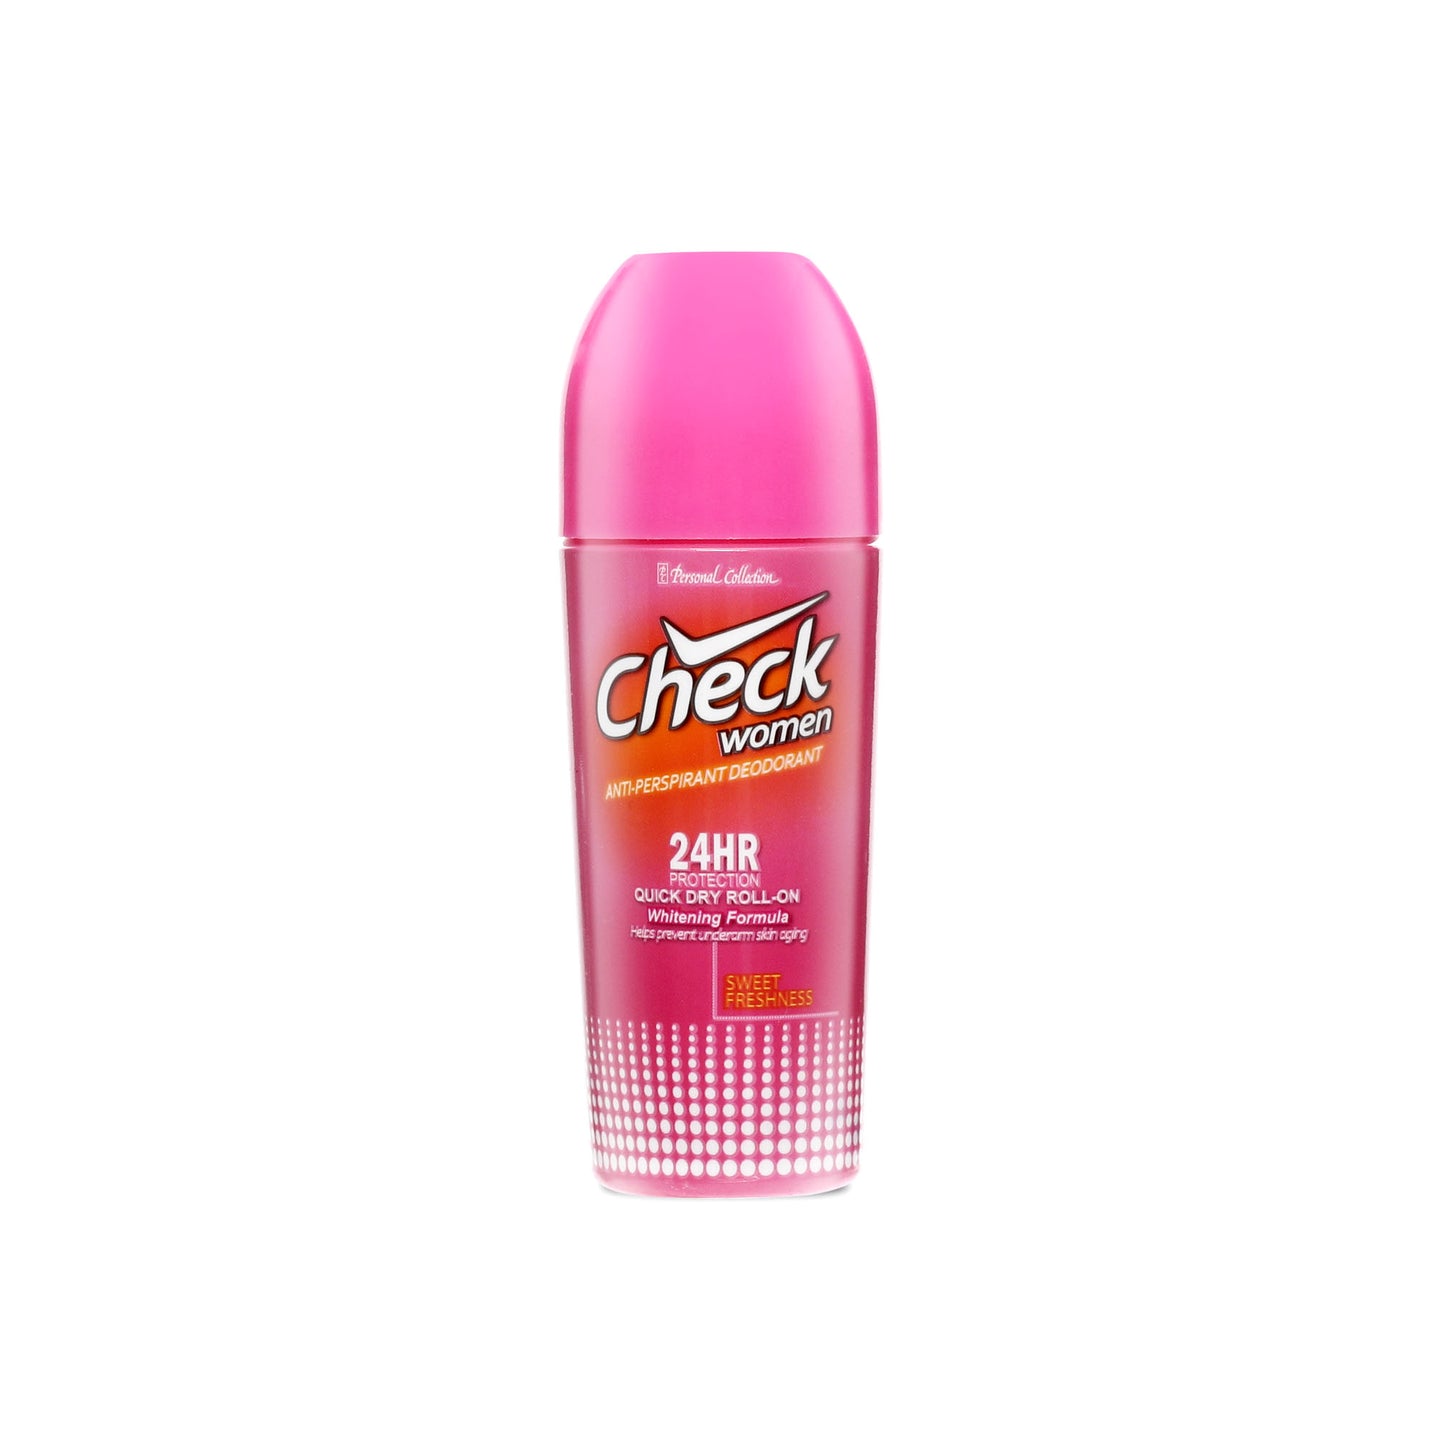 Check Anti-perspirant Deodorant for Women